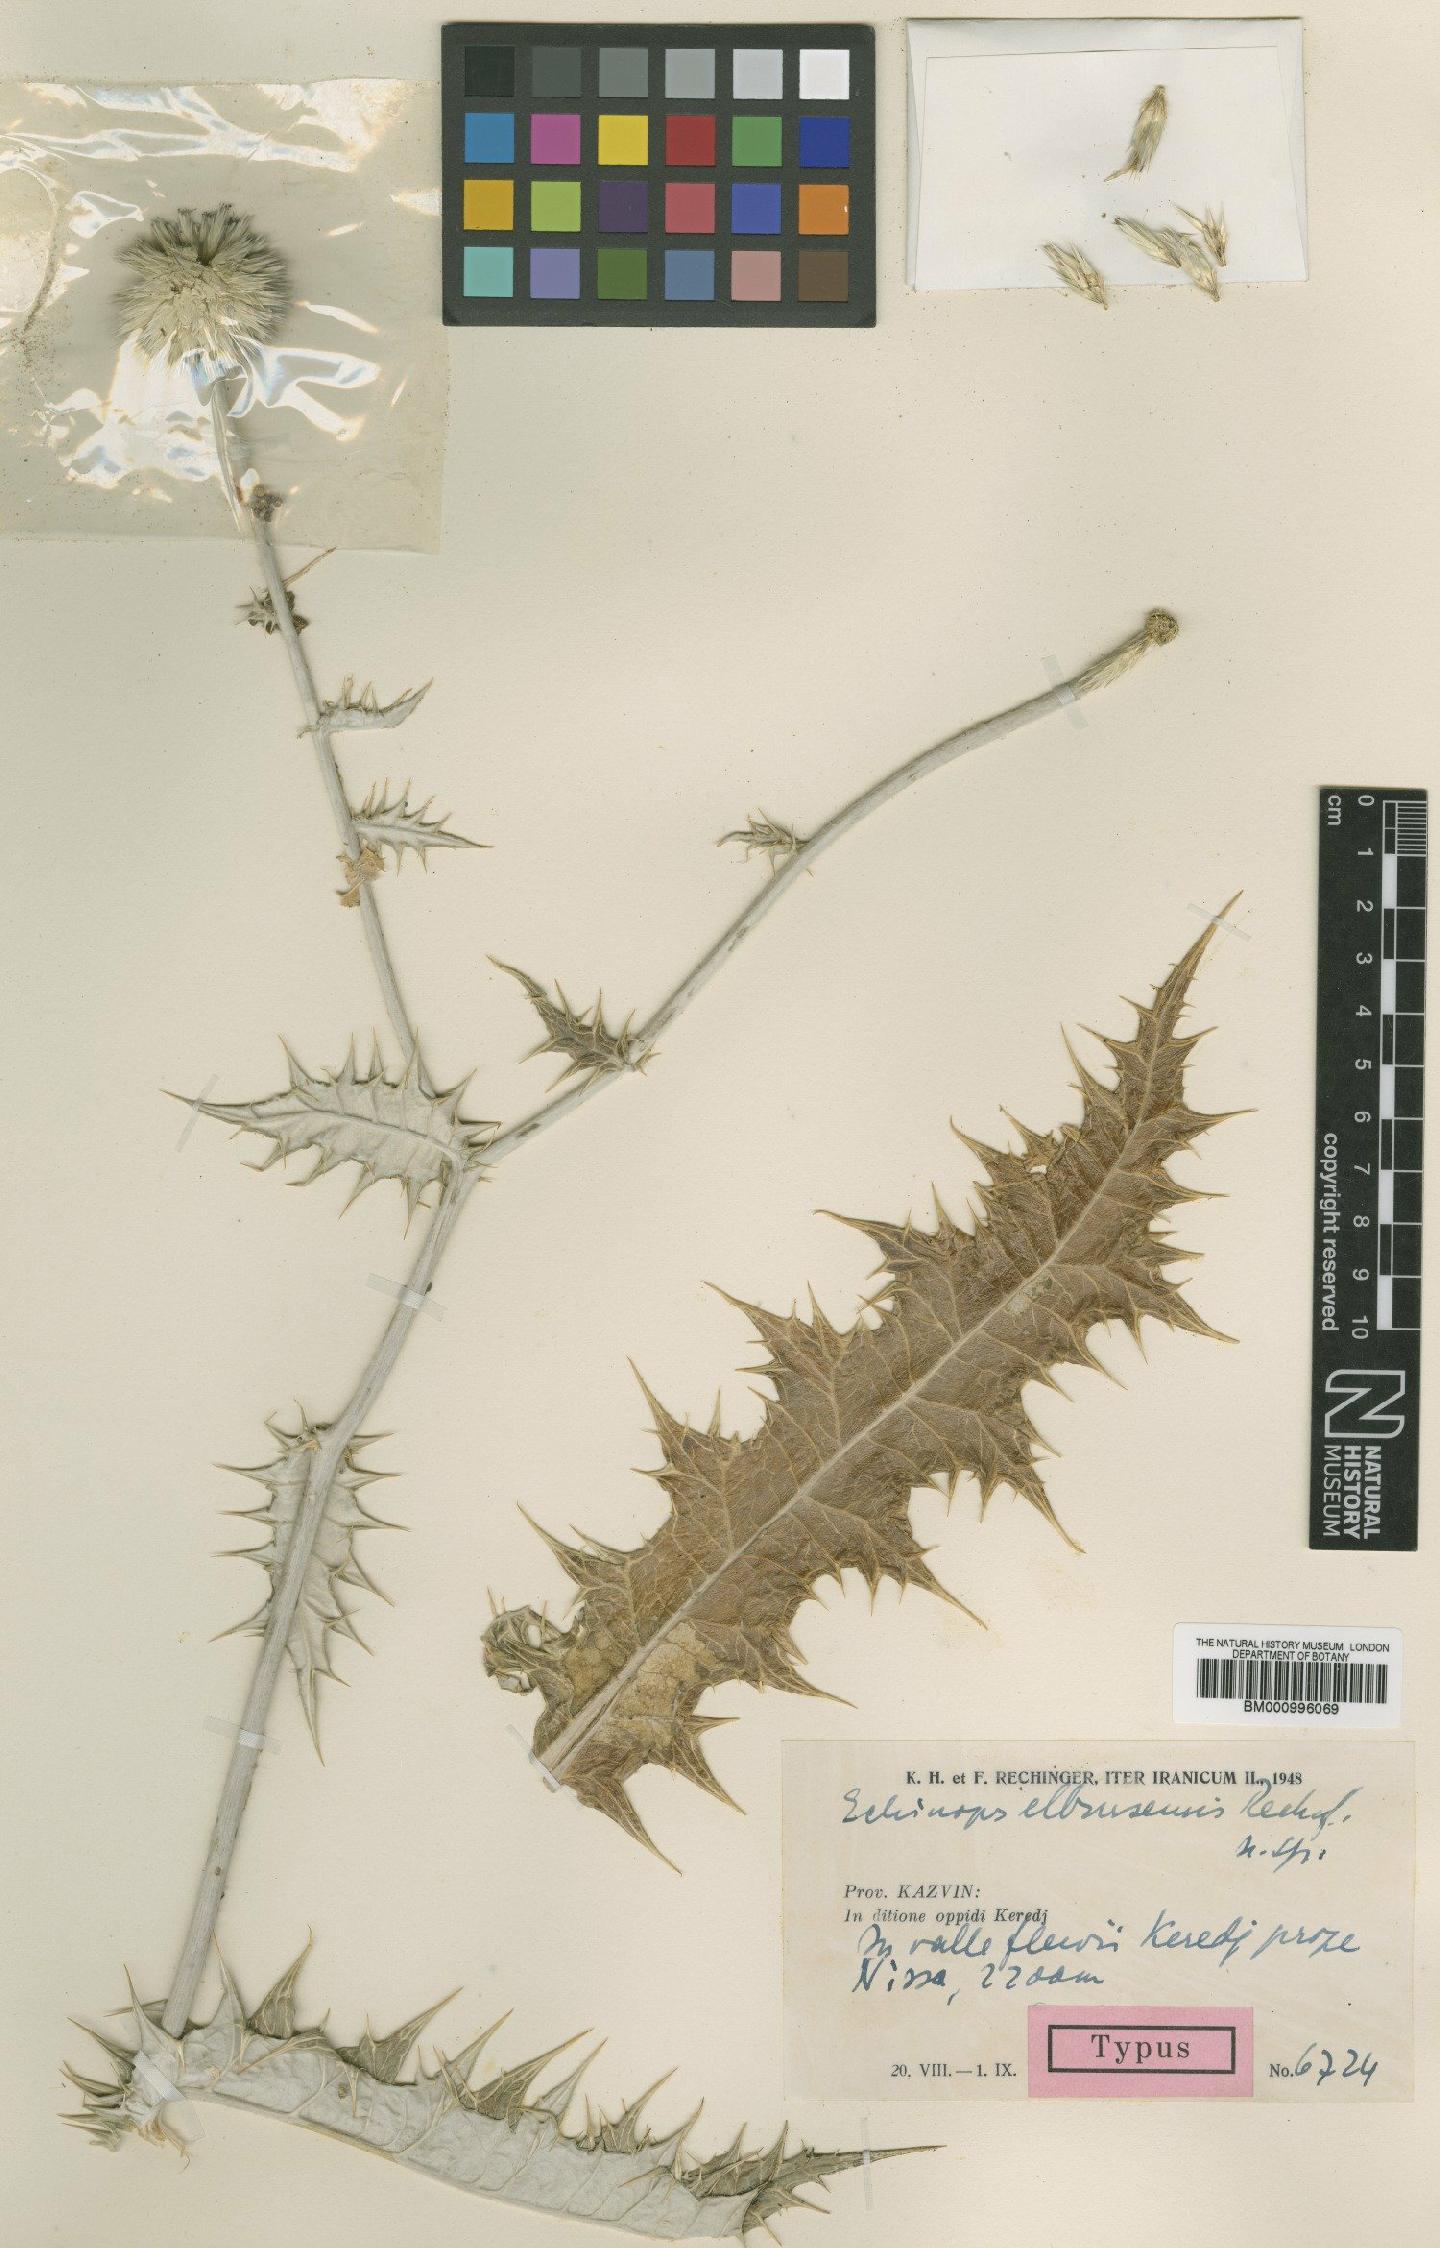 To NHMUK collection (Echinops elbursensis Rech.f.; Type; NHMUK:ecatalogue:475496)